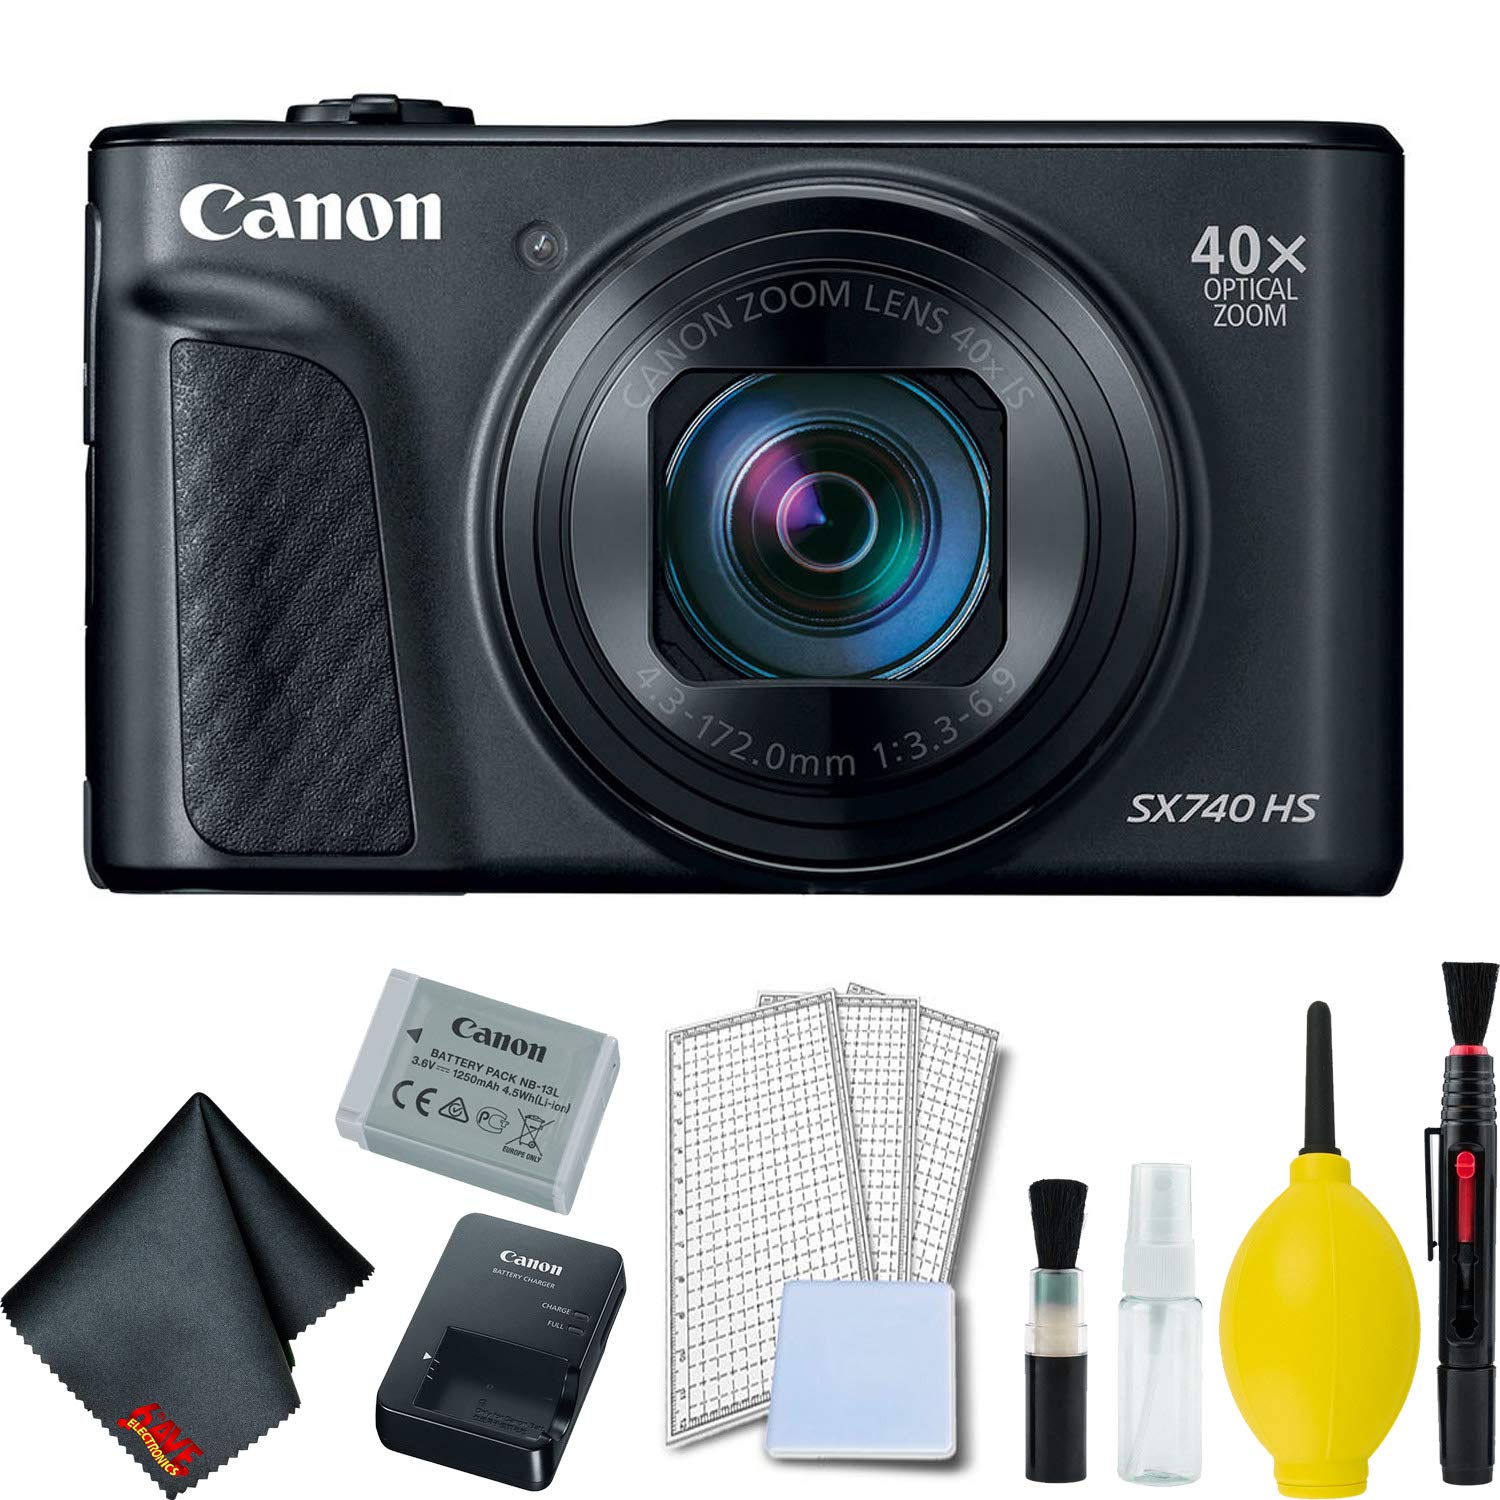 Canon PowerShot SX740 HS Digital Camera (Black) Basic Bundle - International Model